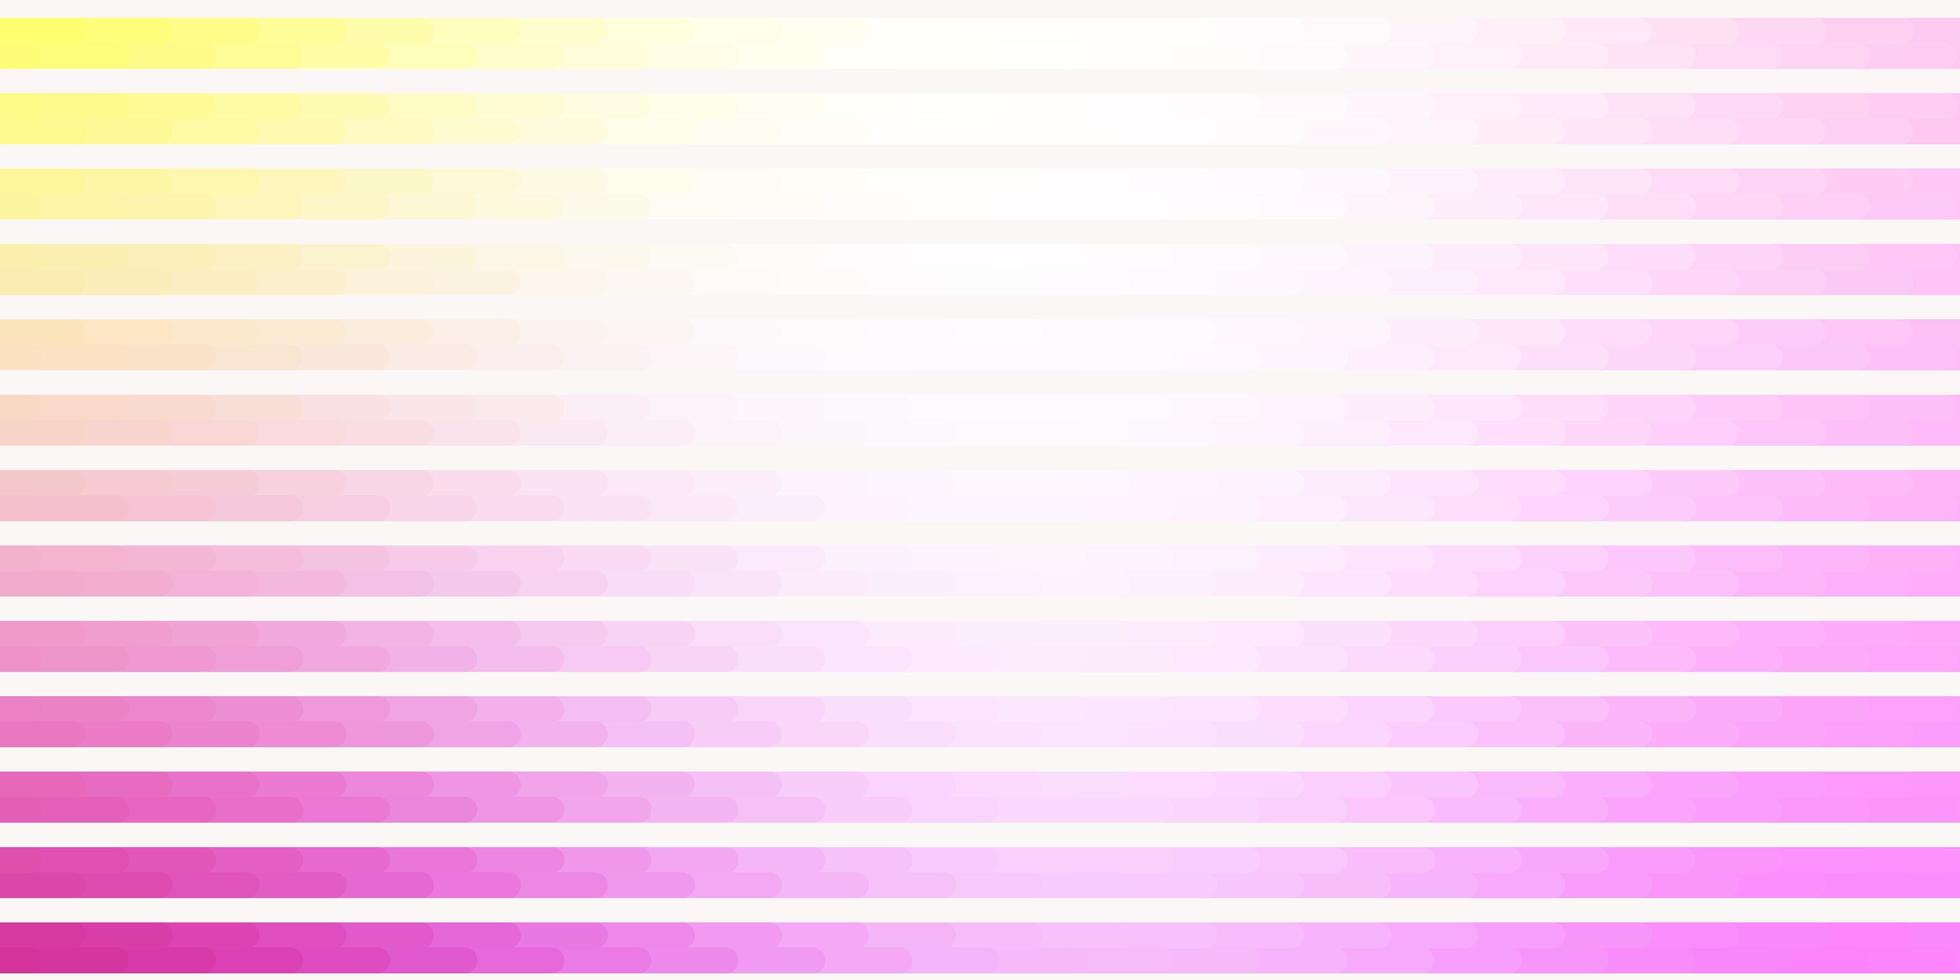 Fondo de vector amarillo rosa claro con líneas